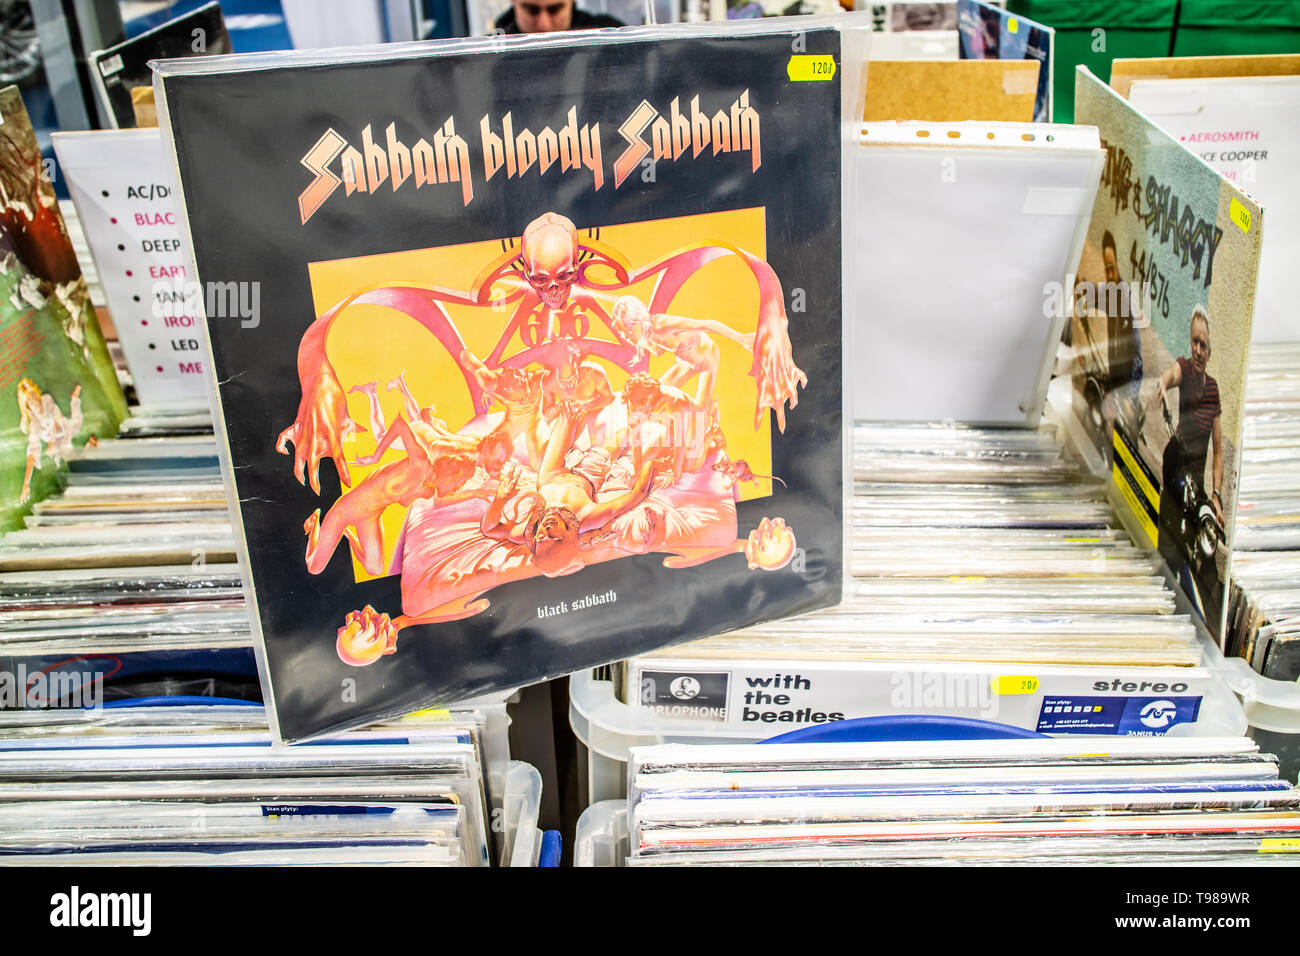 Nadarzyn, Poland, May 11, 2019 Black Sabbath vinyl album on display for sale, Vinyl, LP, Album, Rock, English rock band, collection of Vinyls Stock Photo